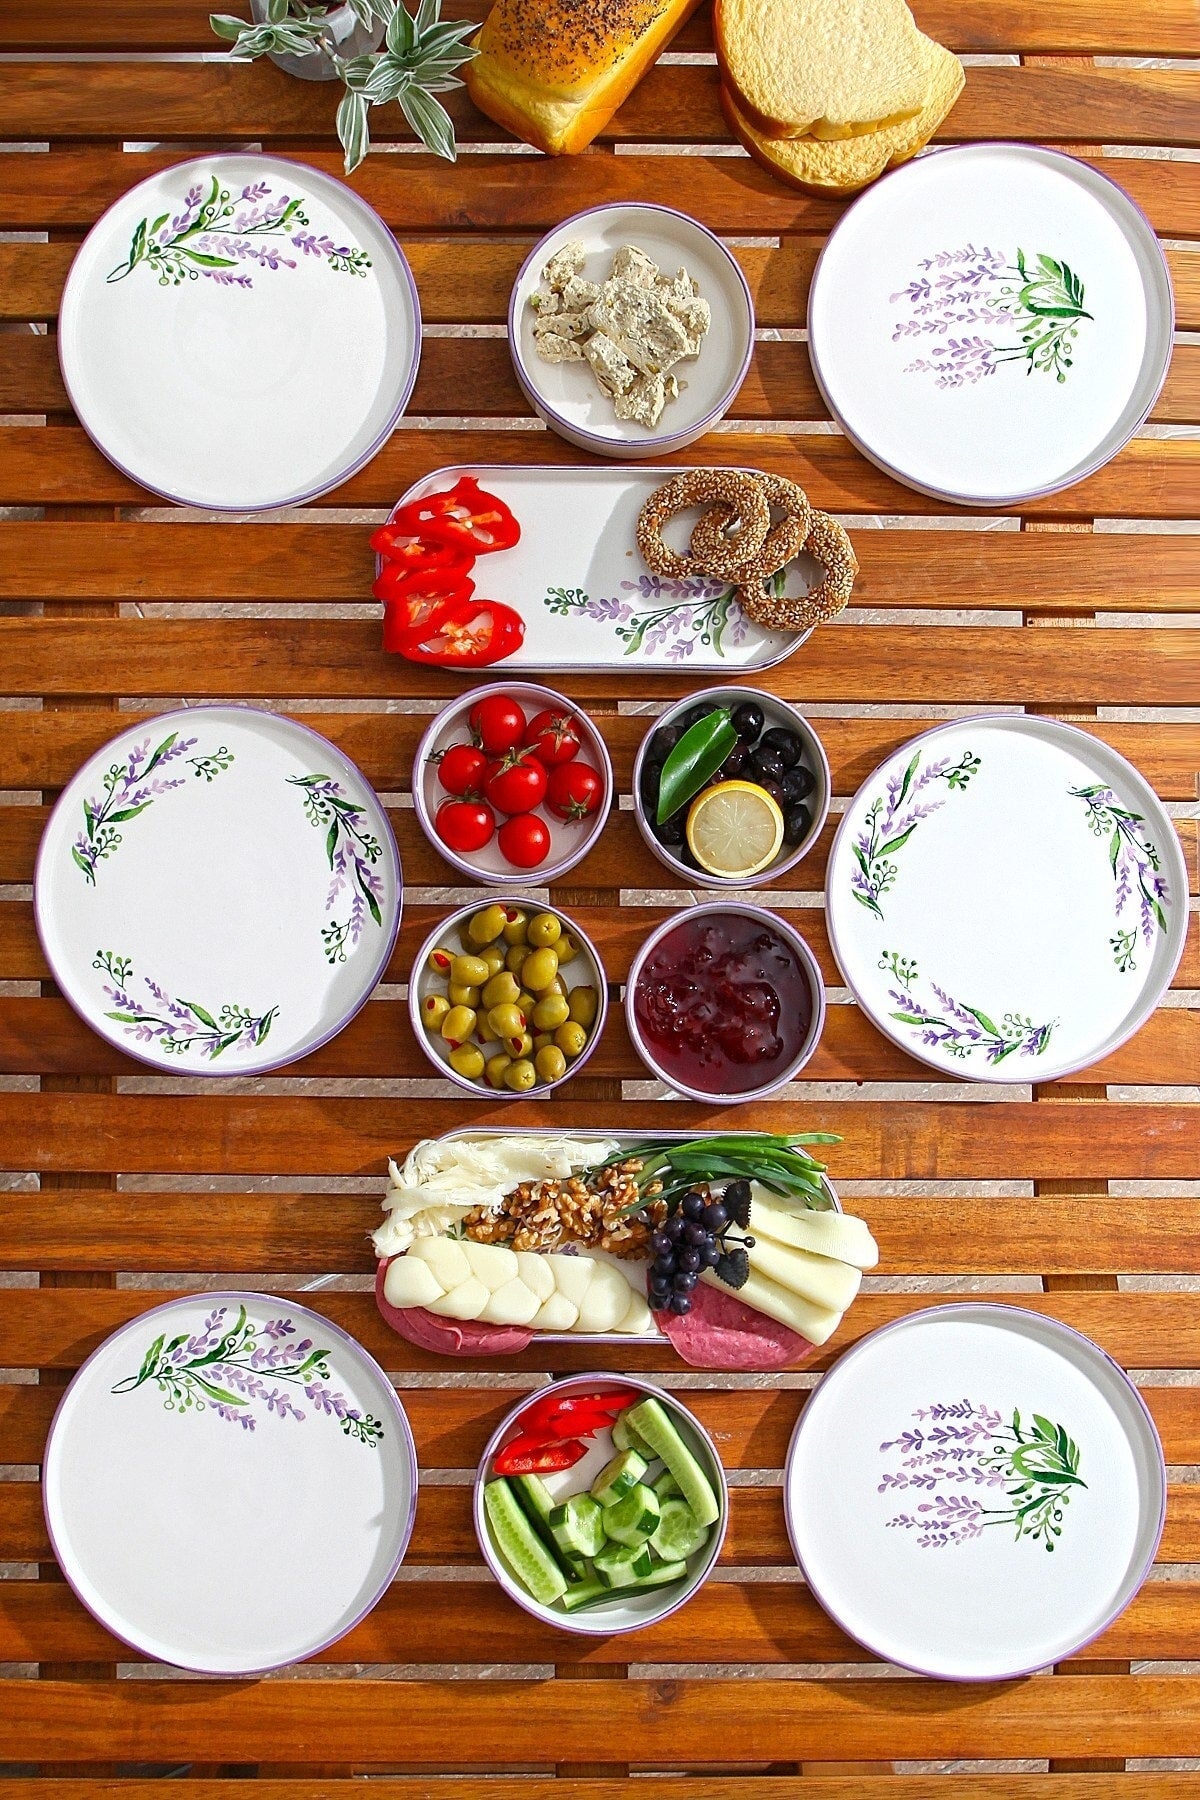 14 Piece Stackable Lavender Breakfast Set for 6 People - Luxury Breakfast Presentation Set Plate